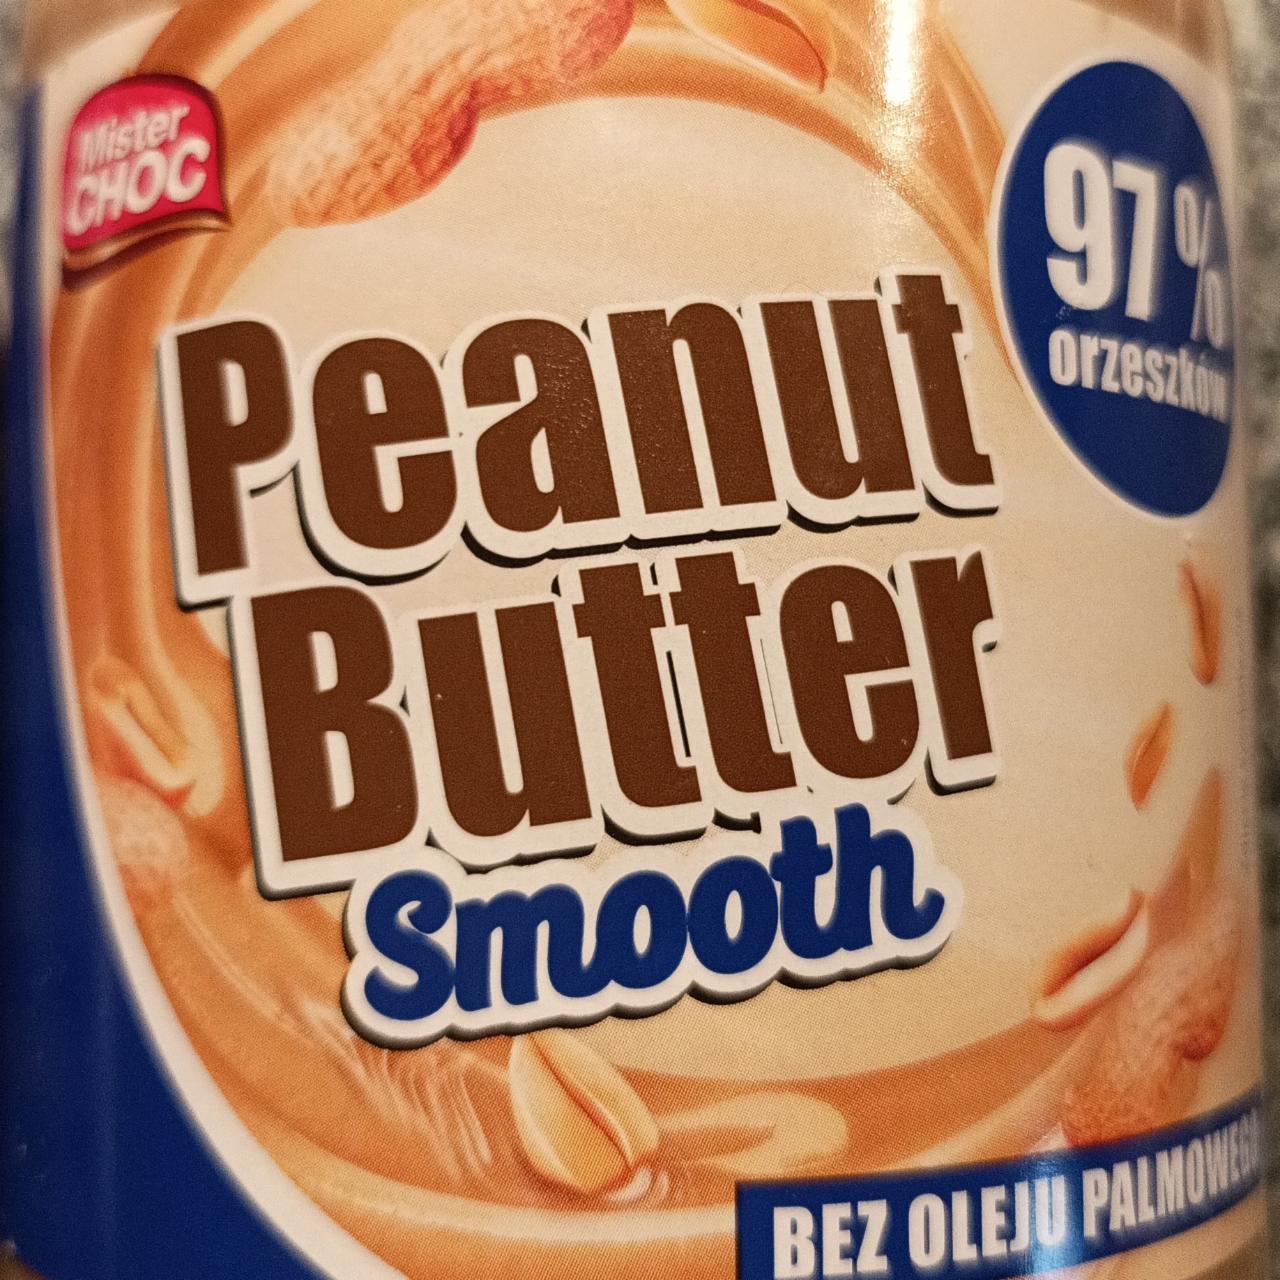 Фото - Арахисовая паста Peanut Butter Smooth Mister Choc